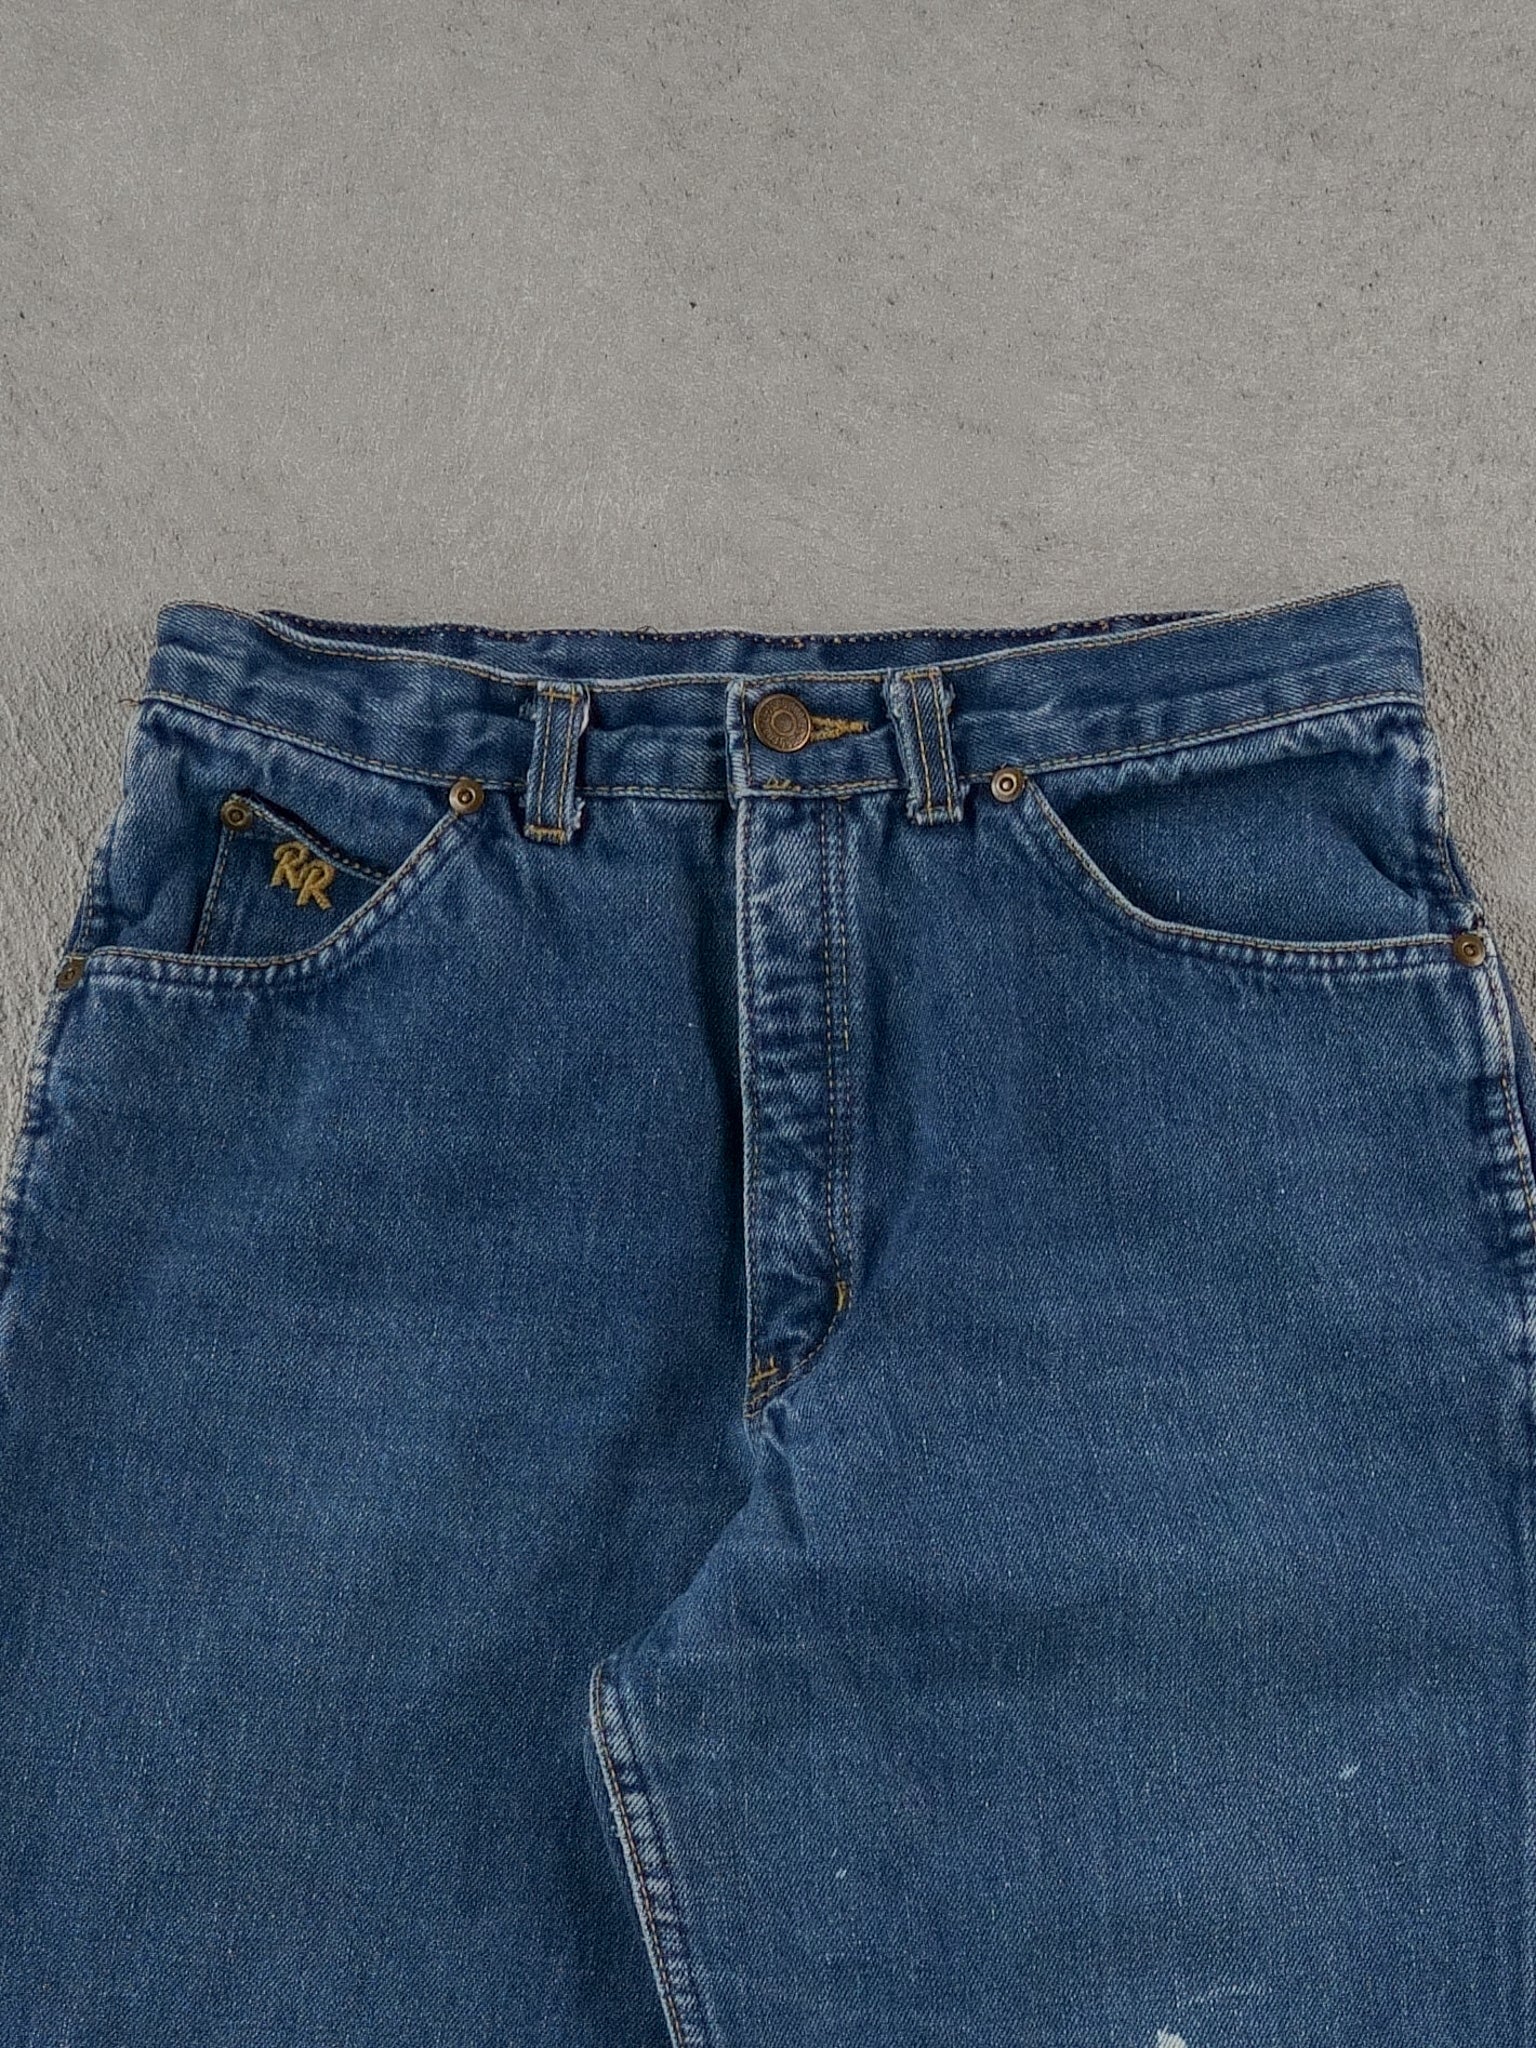 Vintage 80s Blue Roadrunner Denim Jeans (28x35)